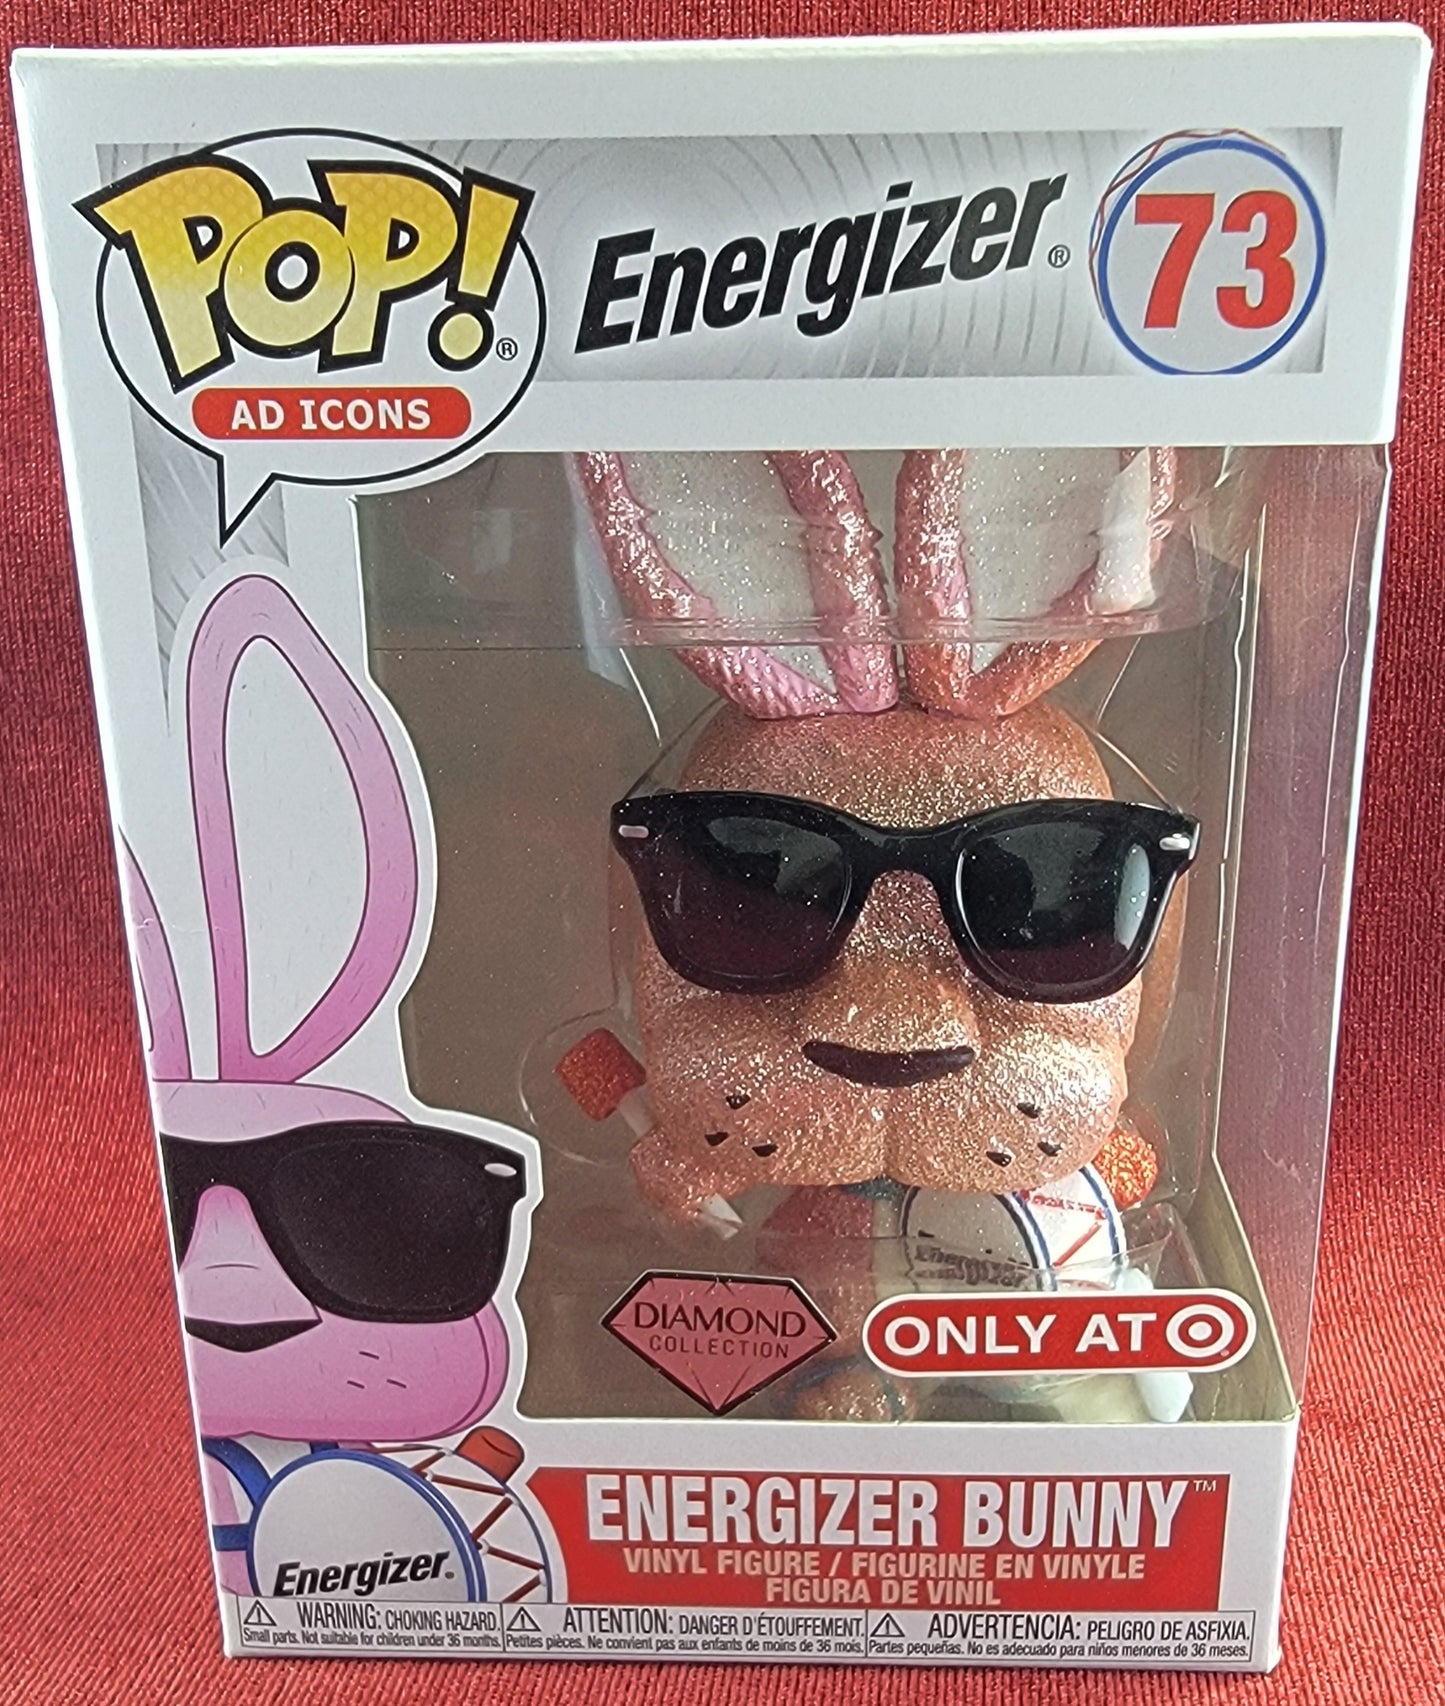 Energizer bunny target exclusive funko # 73 (nib)
With pop protector